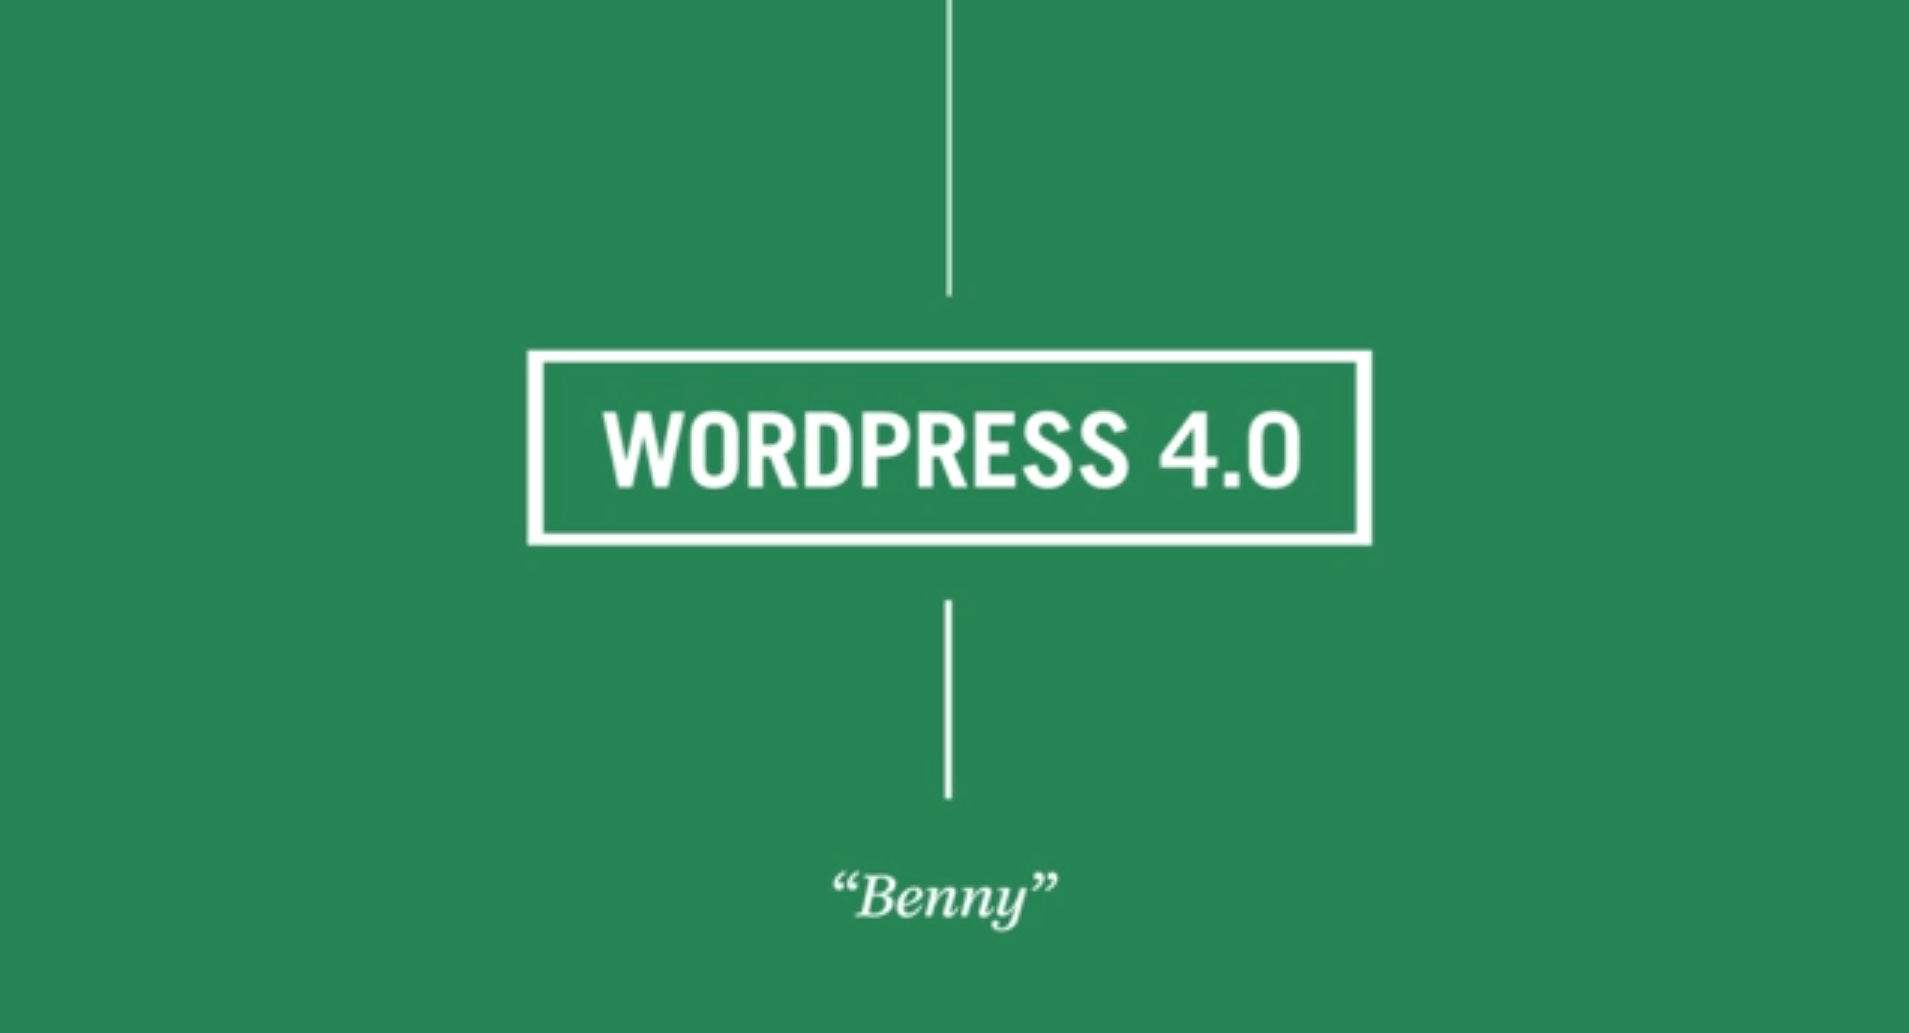 WordPress 4.0 Released